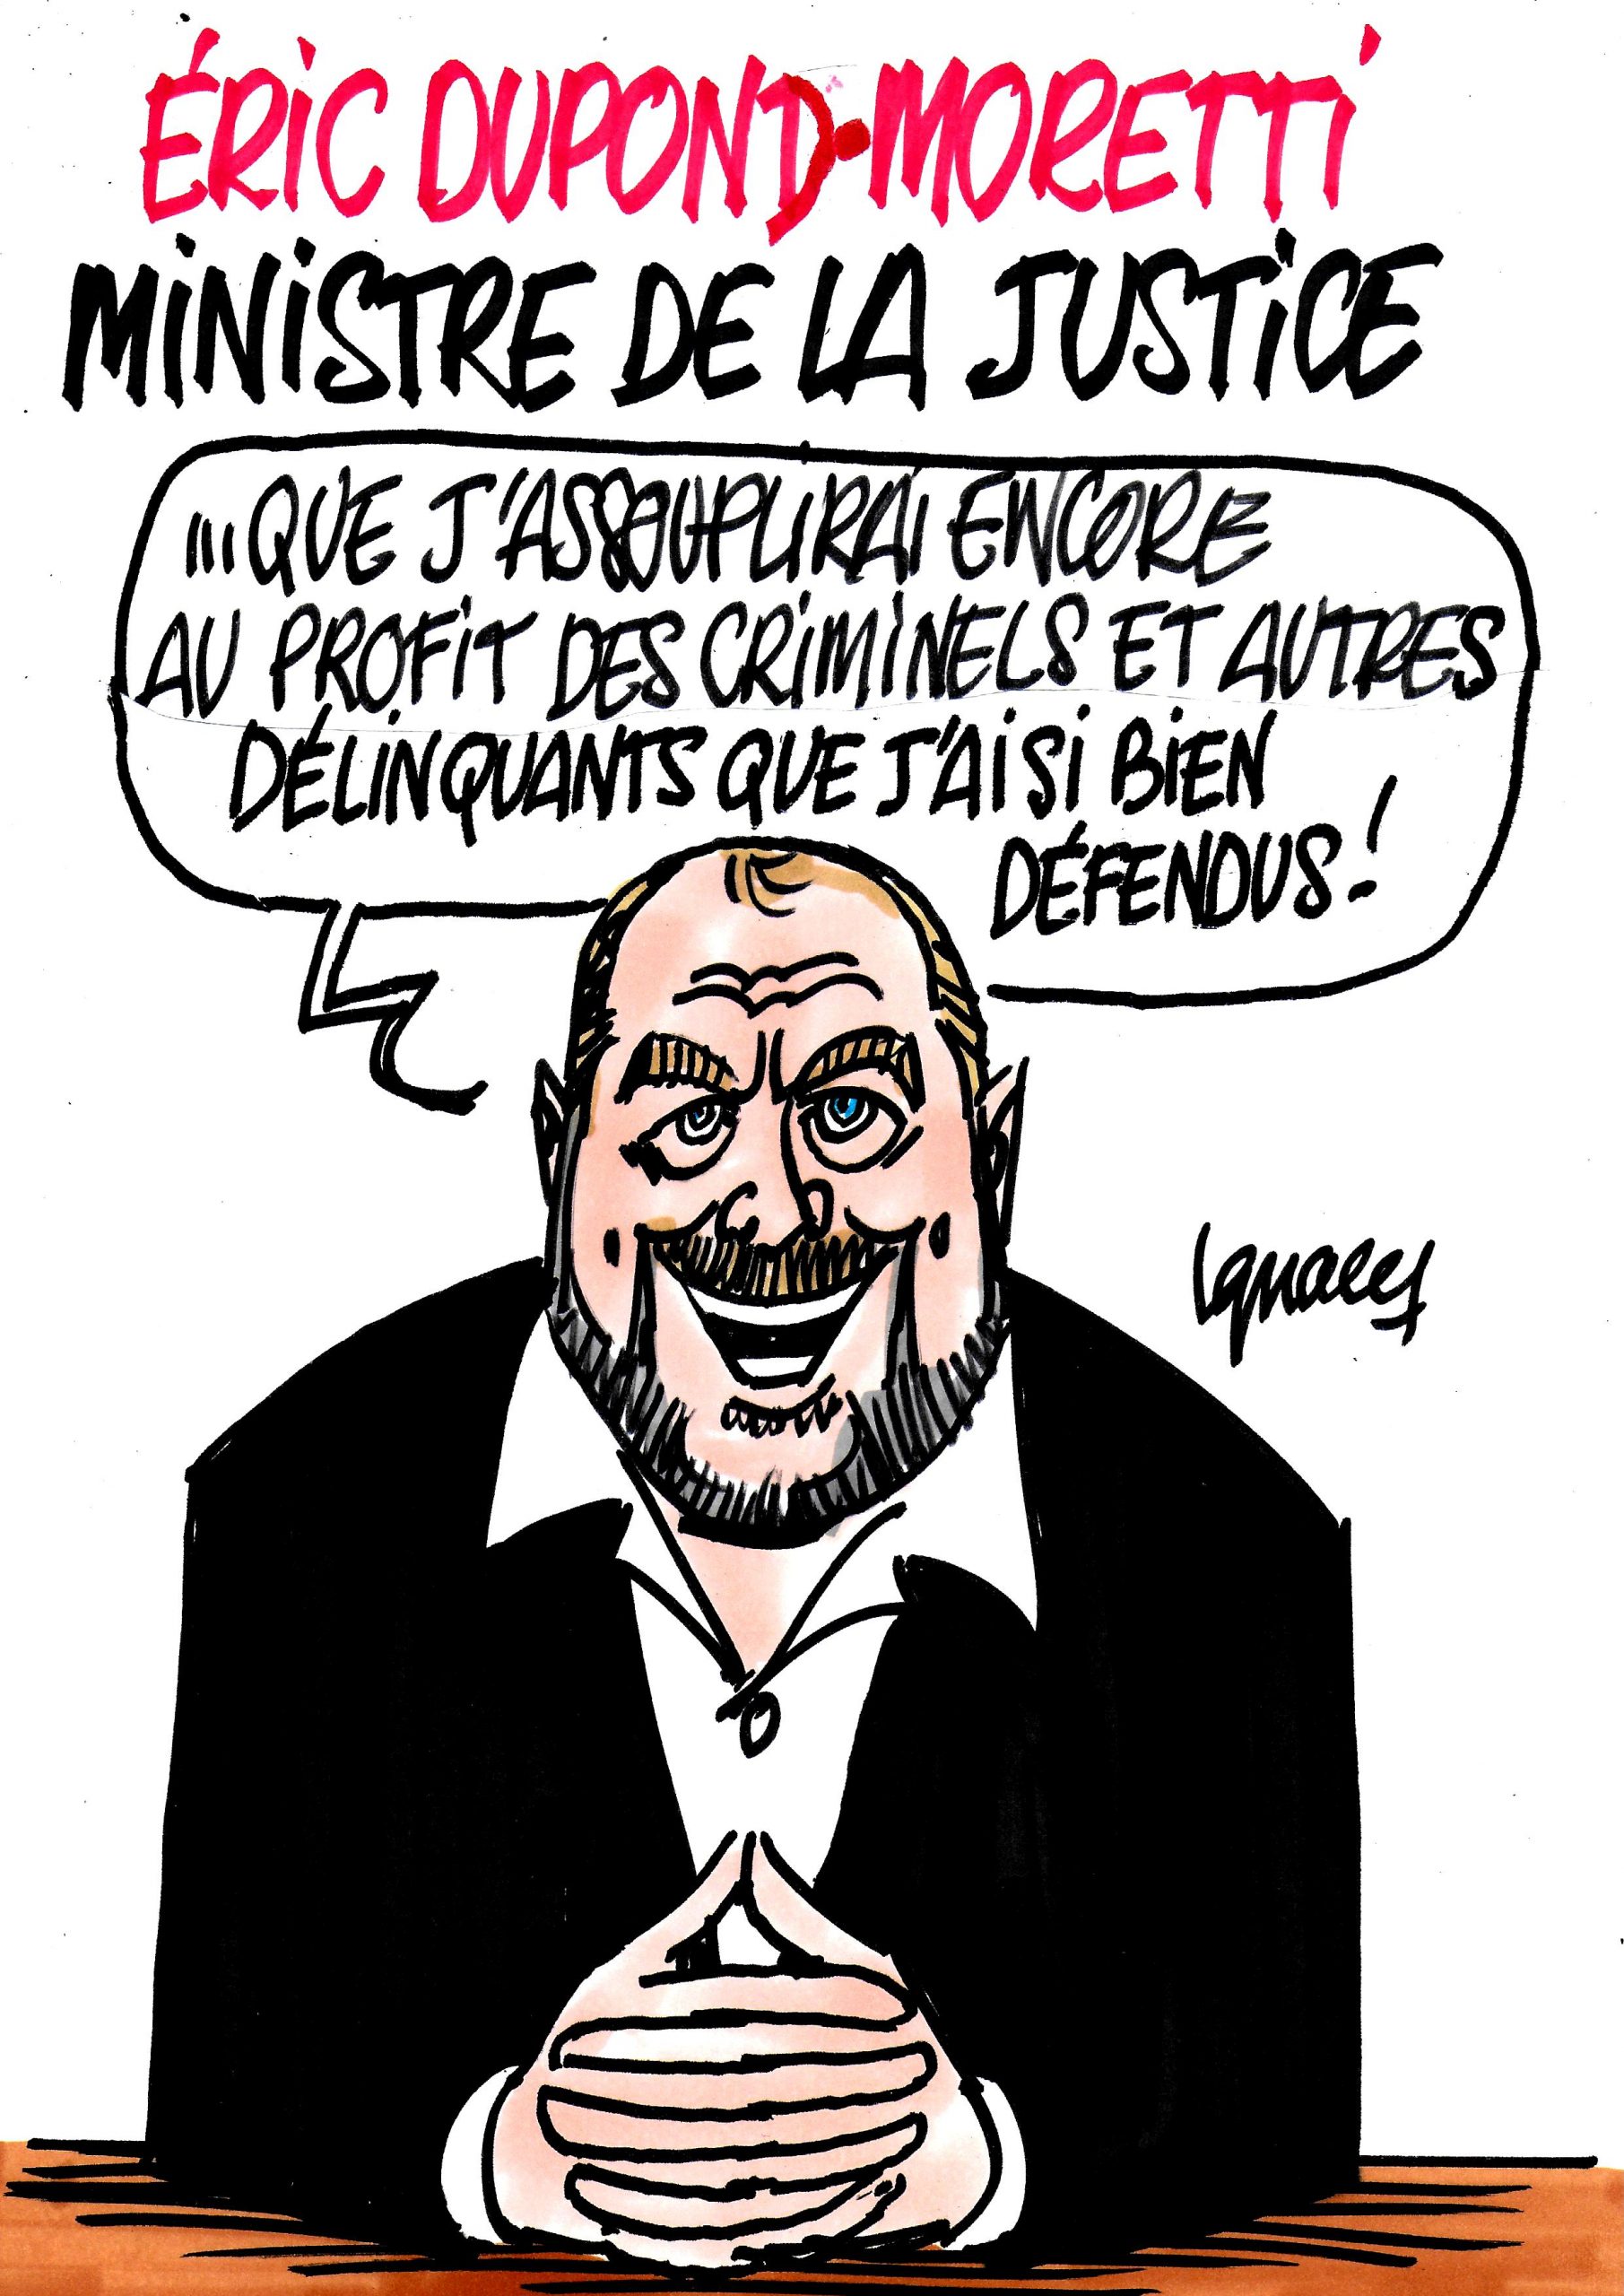 Ignace - Dupond-Moretti ministre de la justice